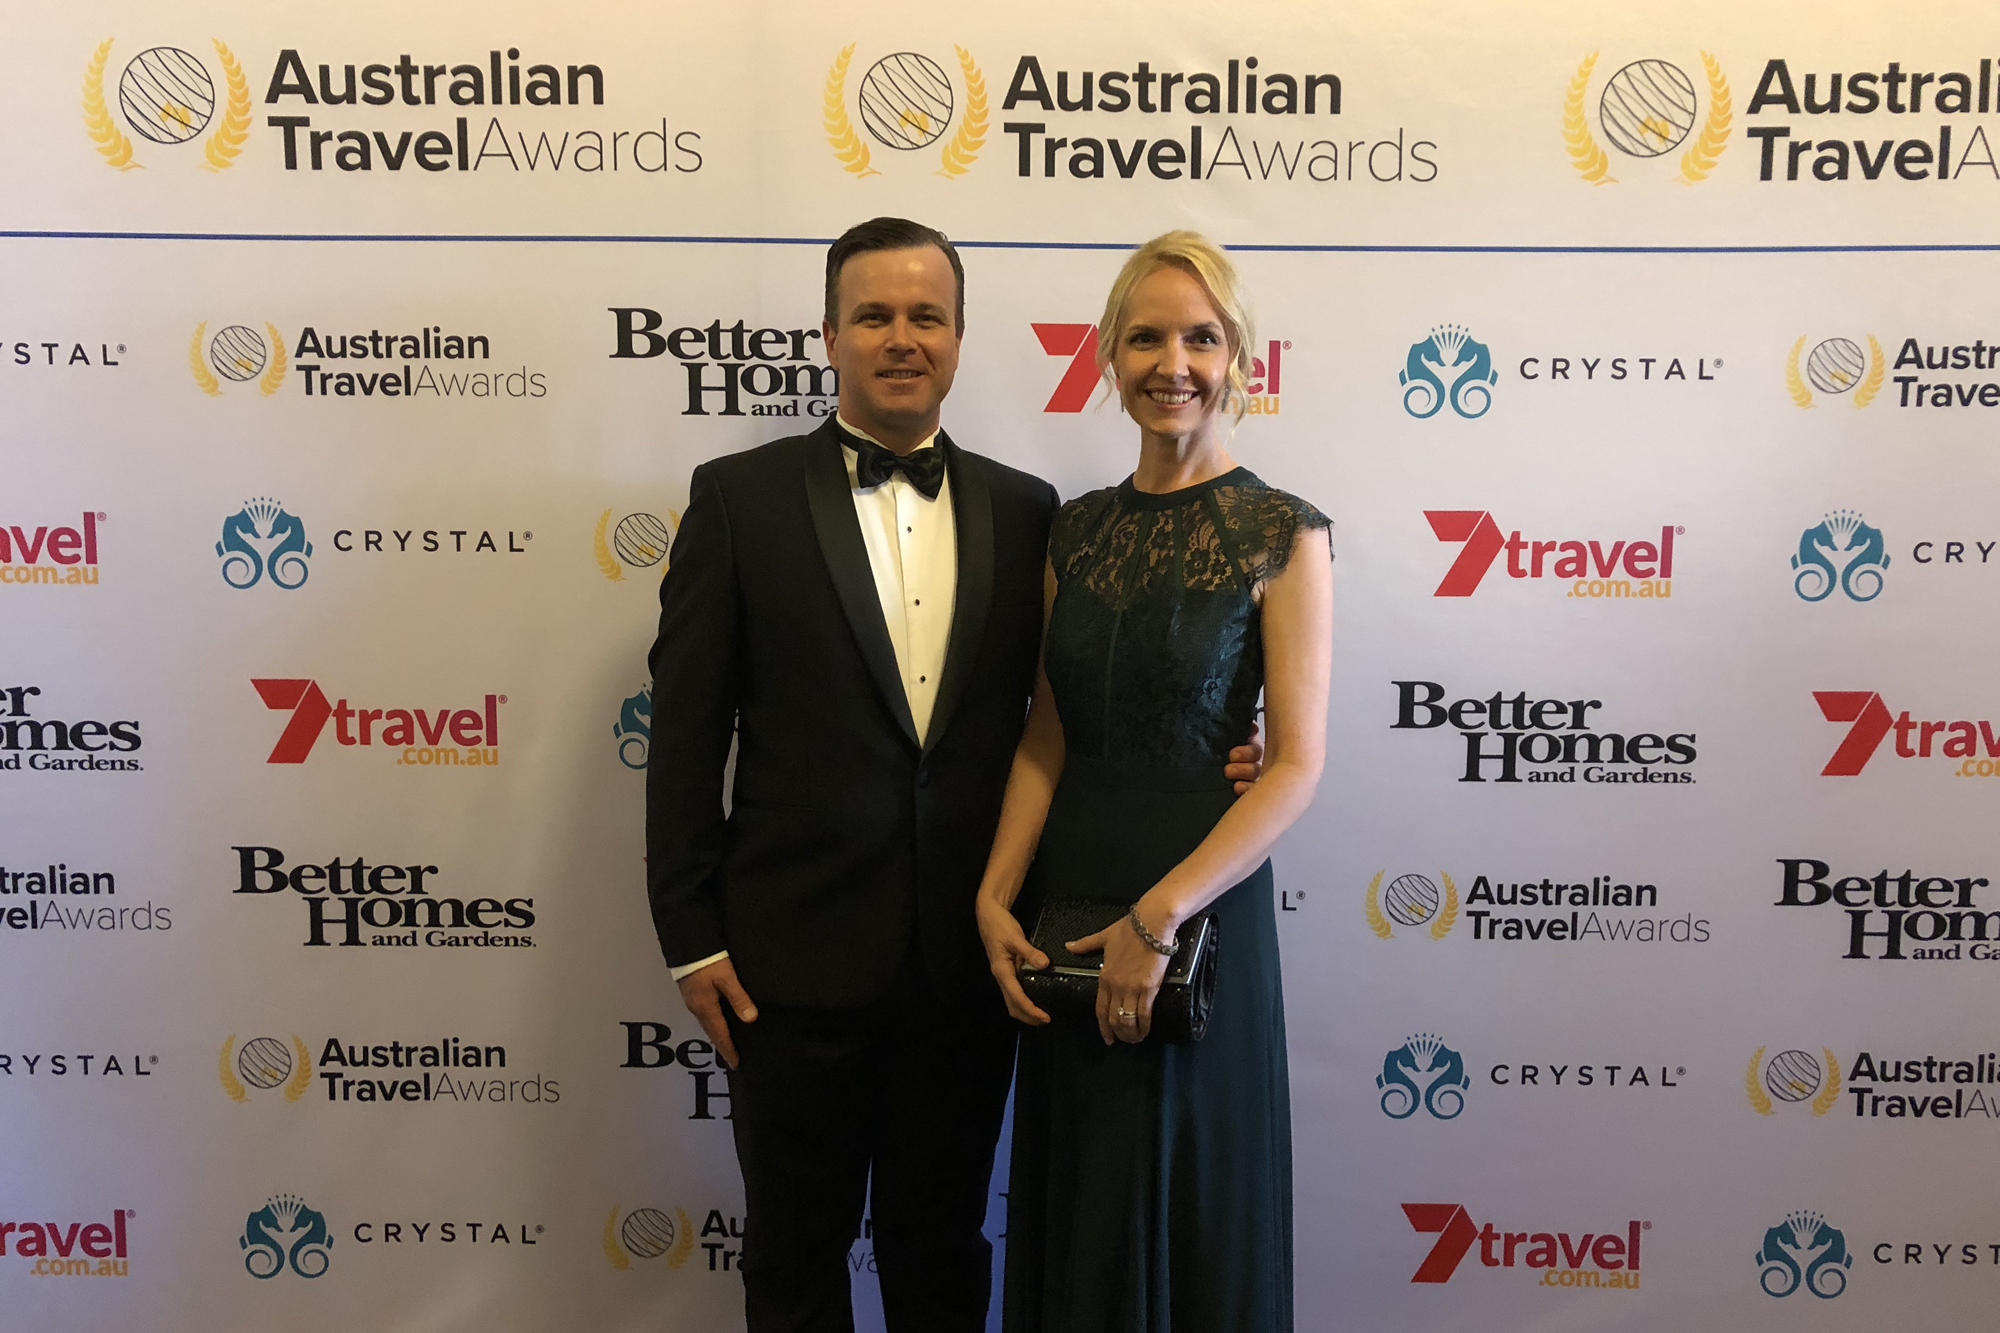 Australian Travel Awards 2018 – Finalists